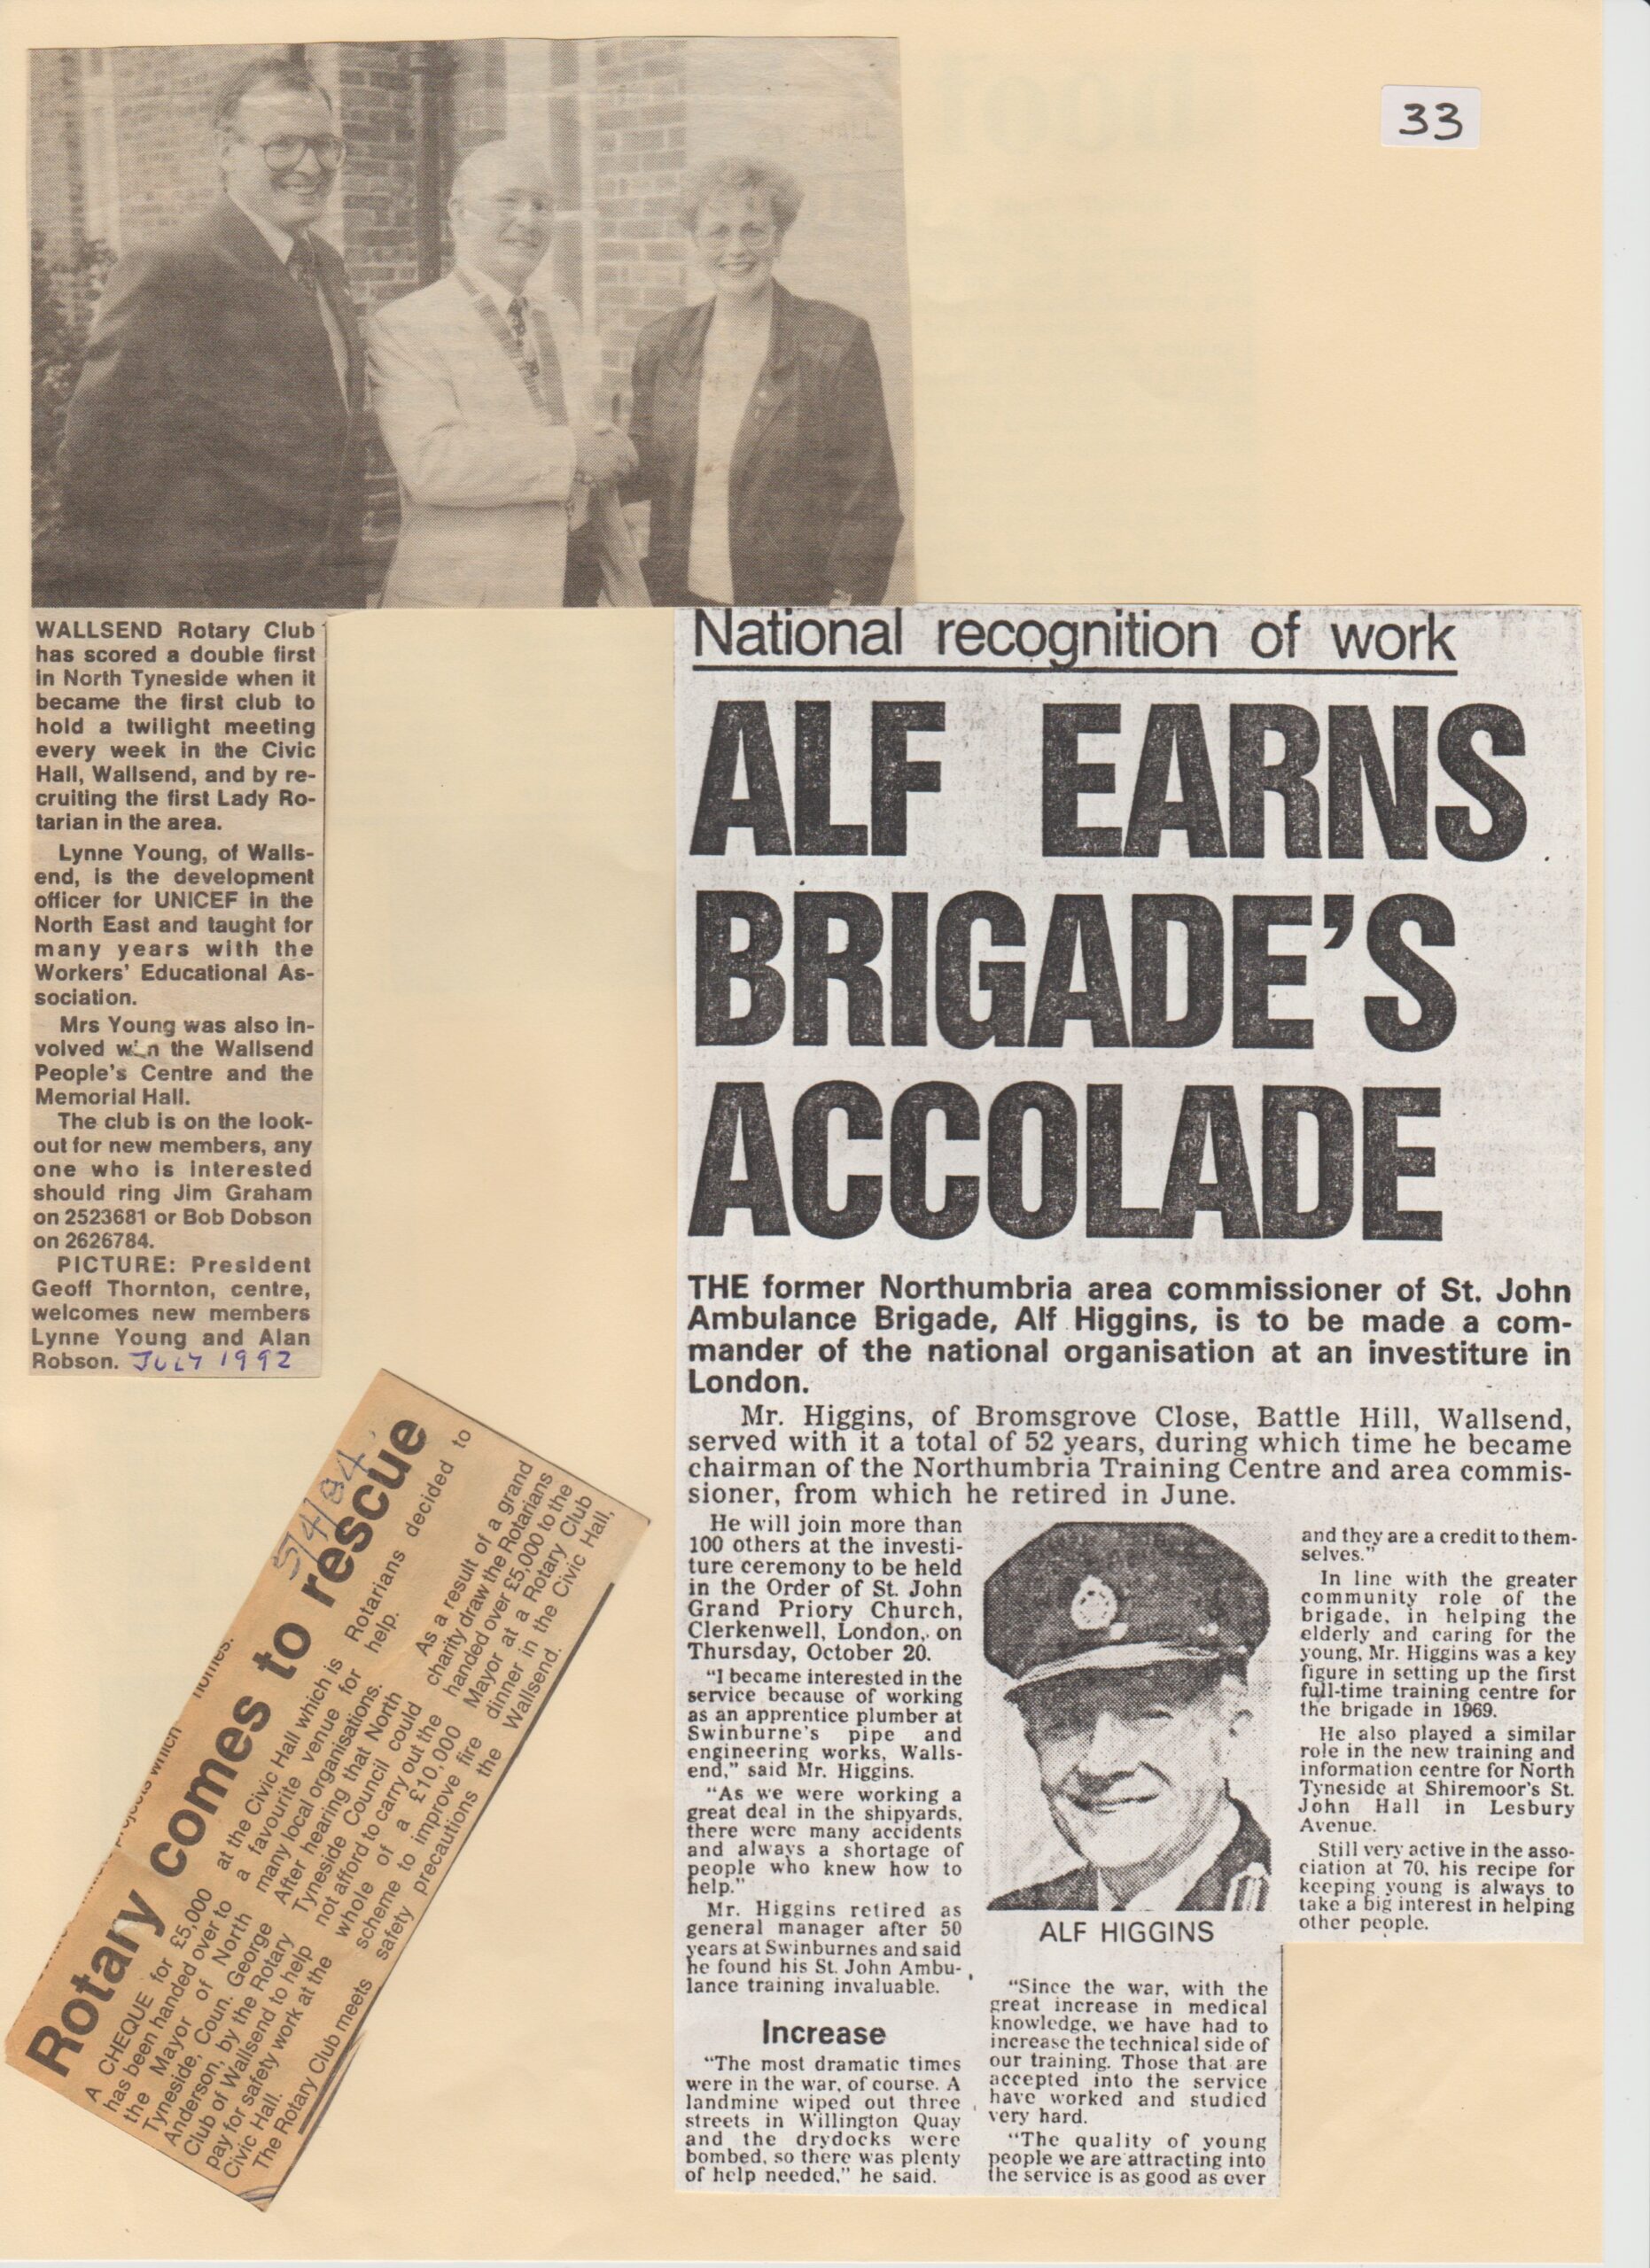 Lynne Young First Lady Rotarian 1992, Alf Higgins Commander of St John_s Ambulance Brigade